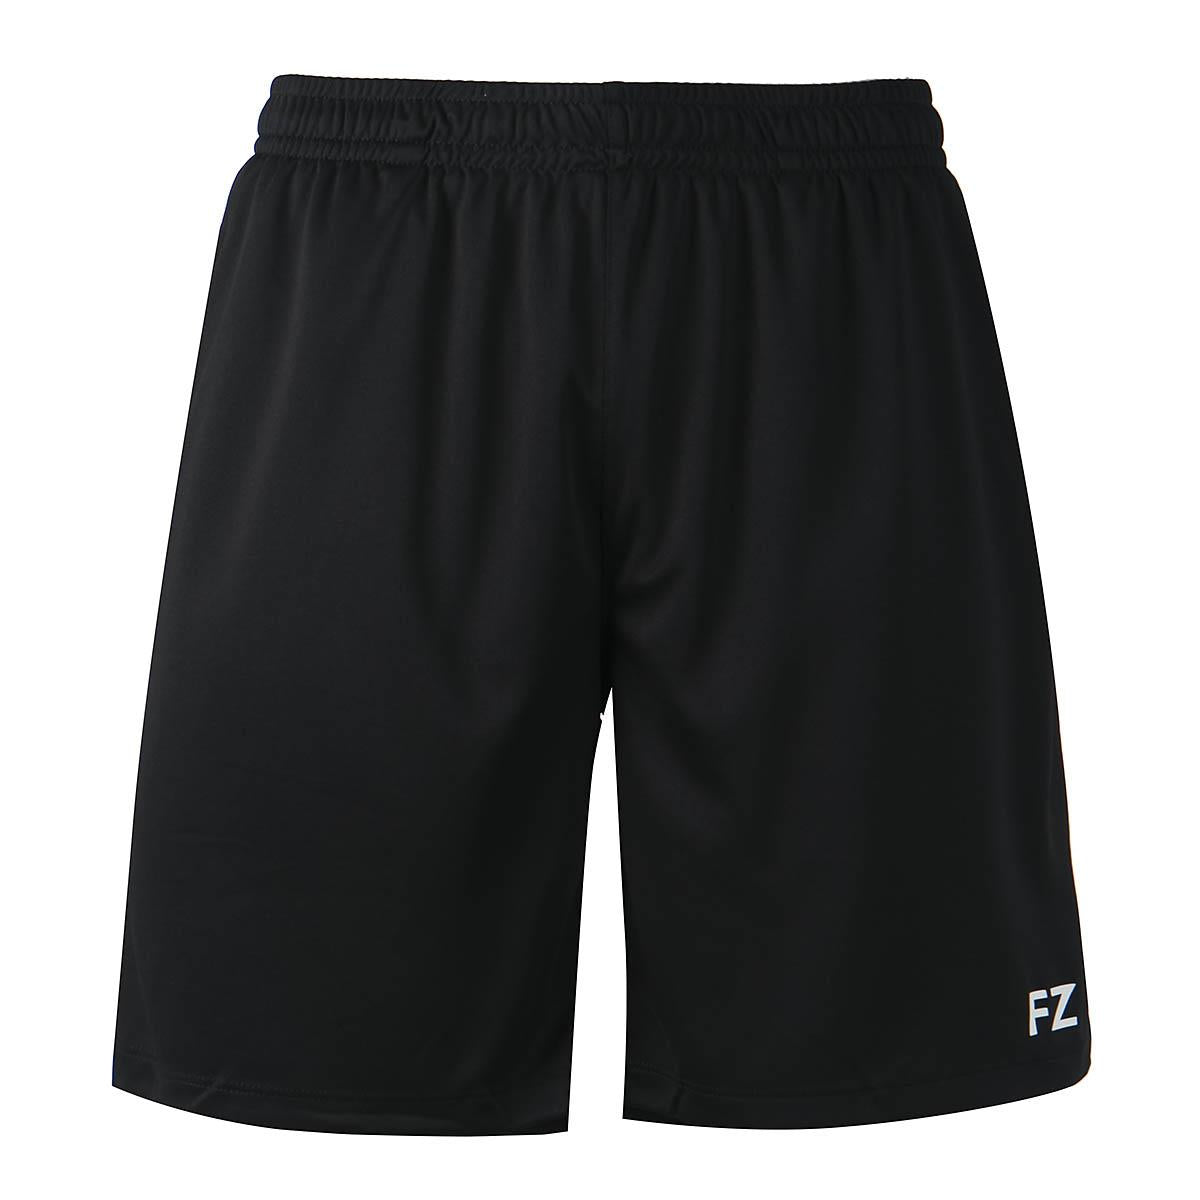 FZ Forza Lindos 2 in 1 Mens Badminton Shorts - Black